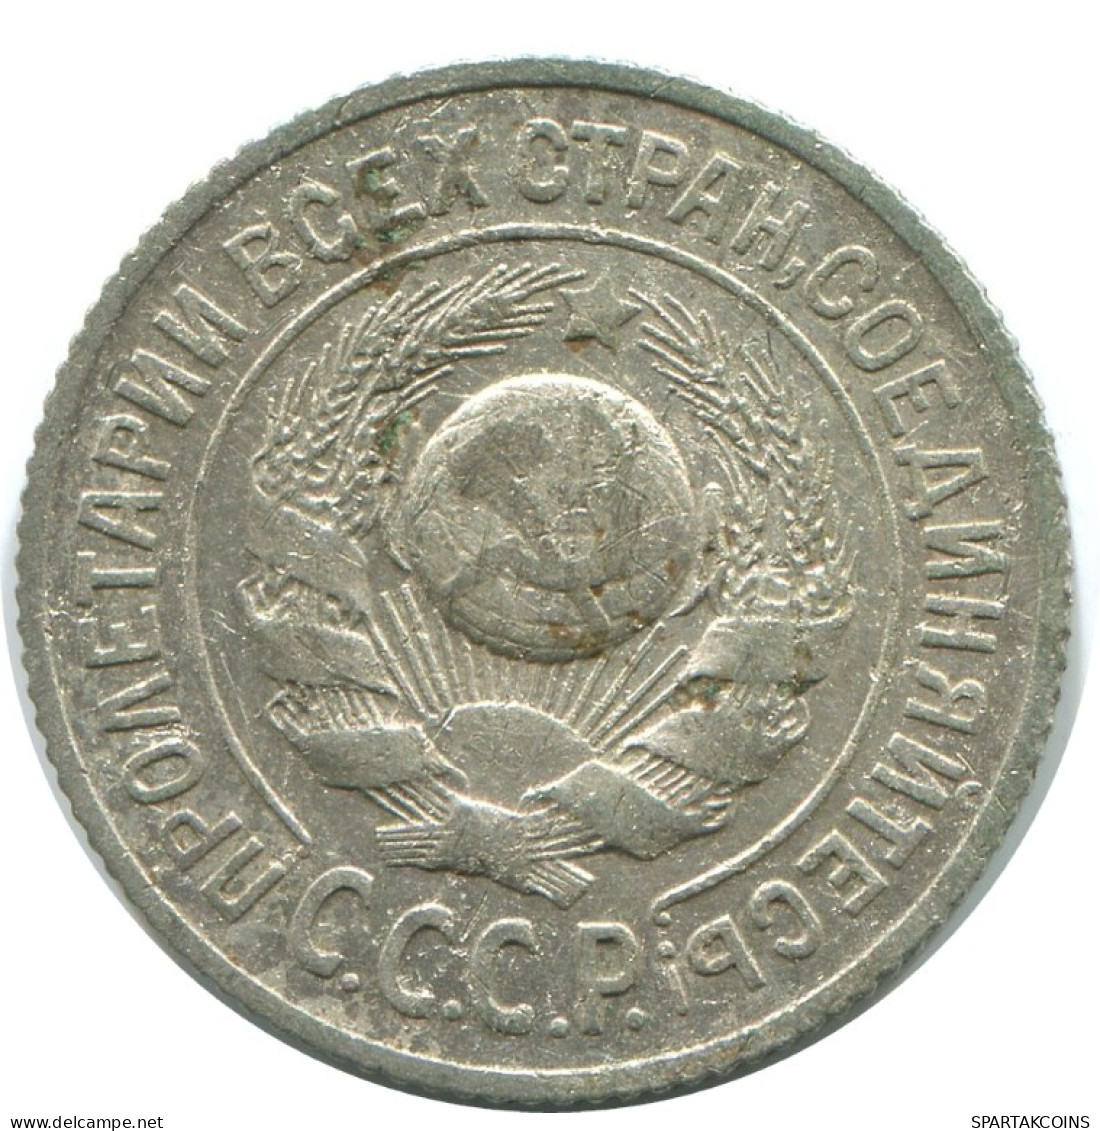 15 KOPEKS 1925 RUSSIA USSR SILVER Coin HIGH GRADE #AF258.4.U.A - Russia